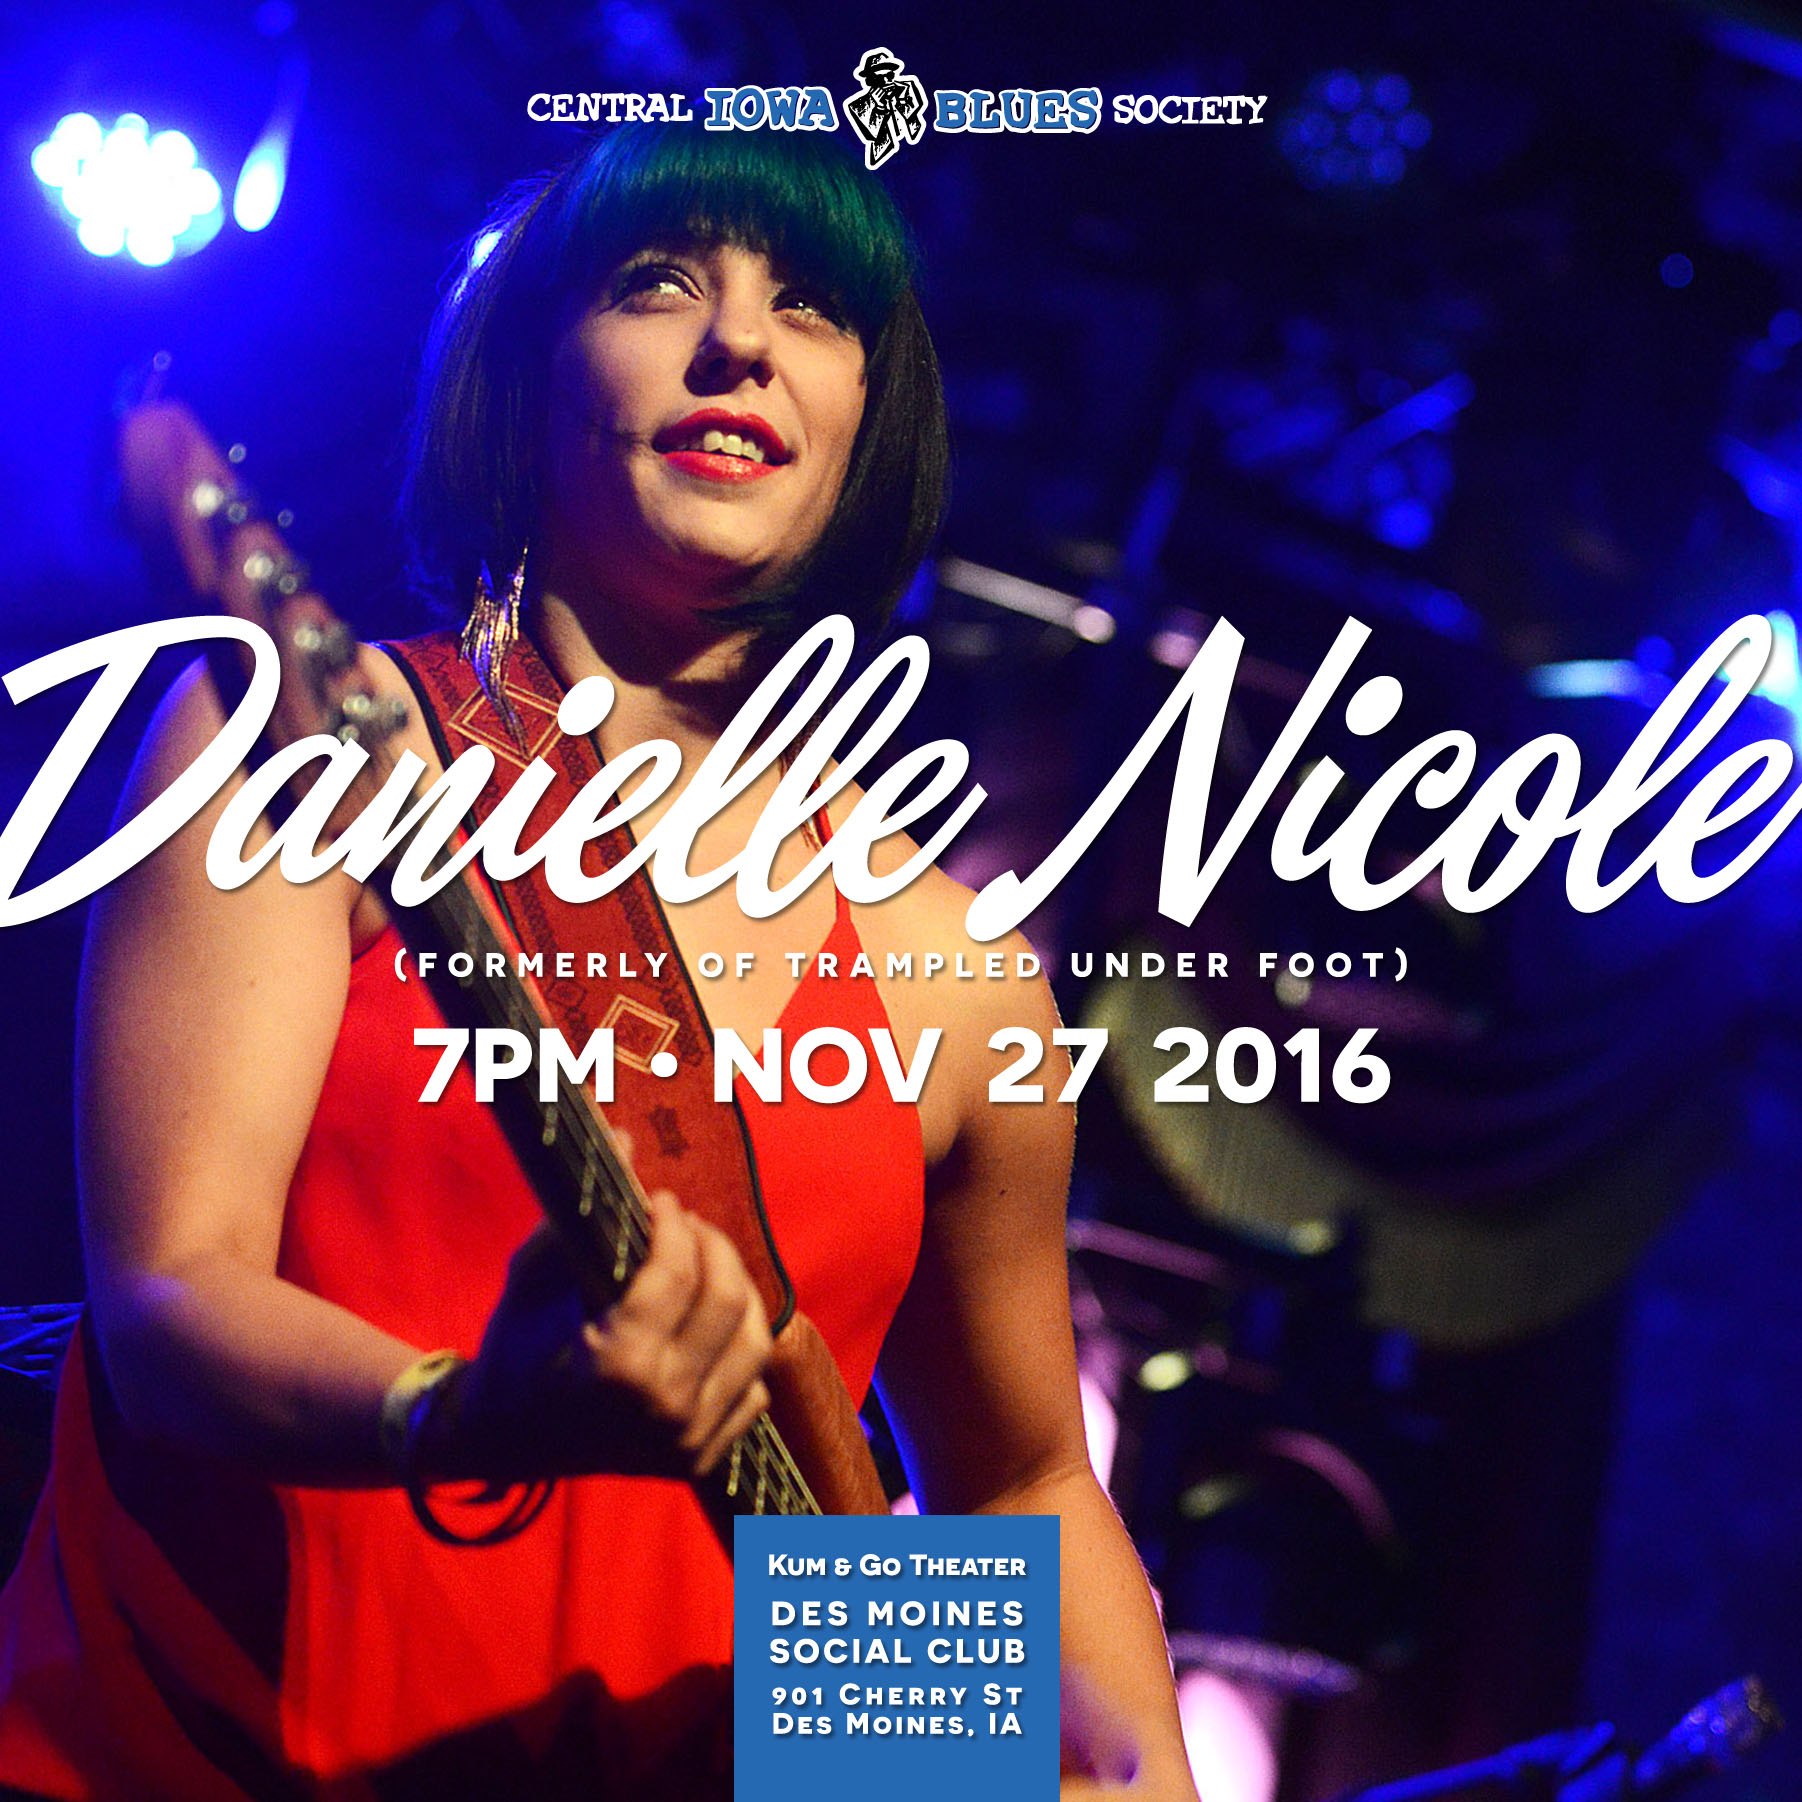 Danielle Nicole Band at Des Moines Social Club on November 27!